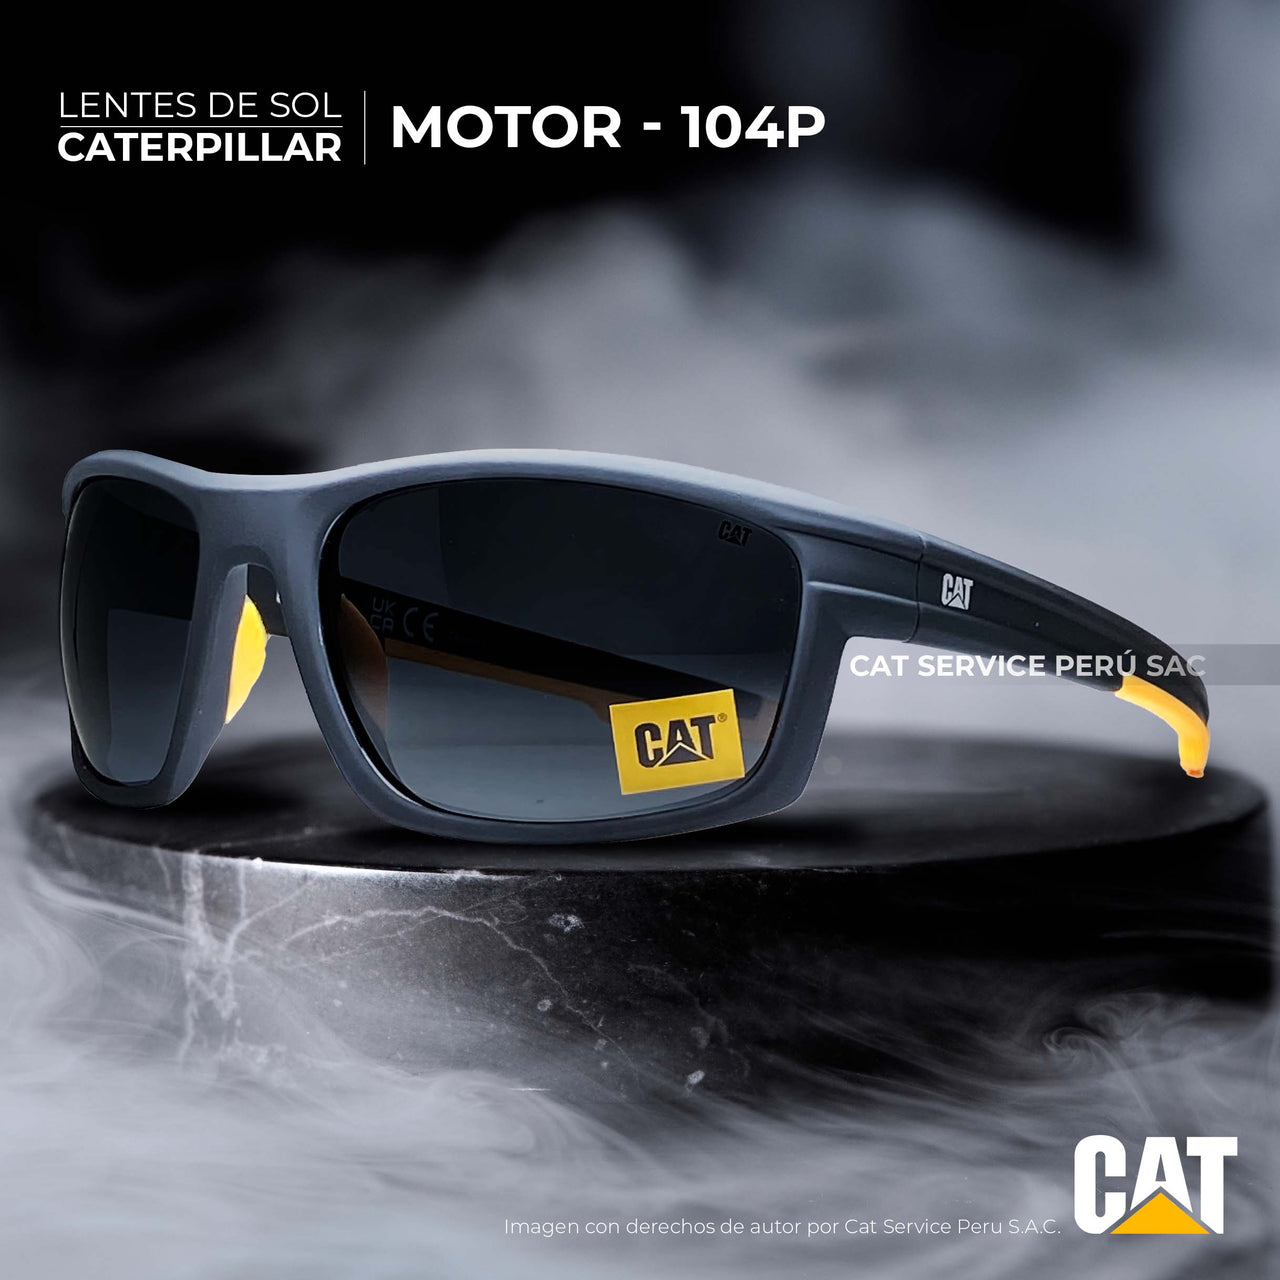 Cat CTS Motor 104P Sunglasses Black Polarized Moons 